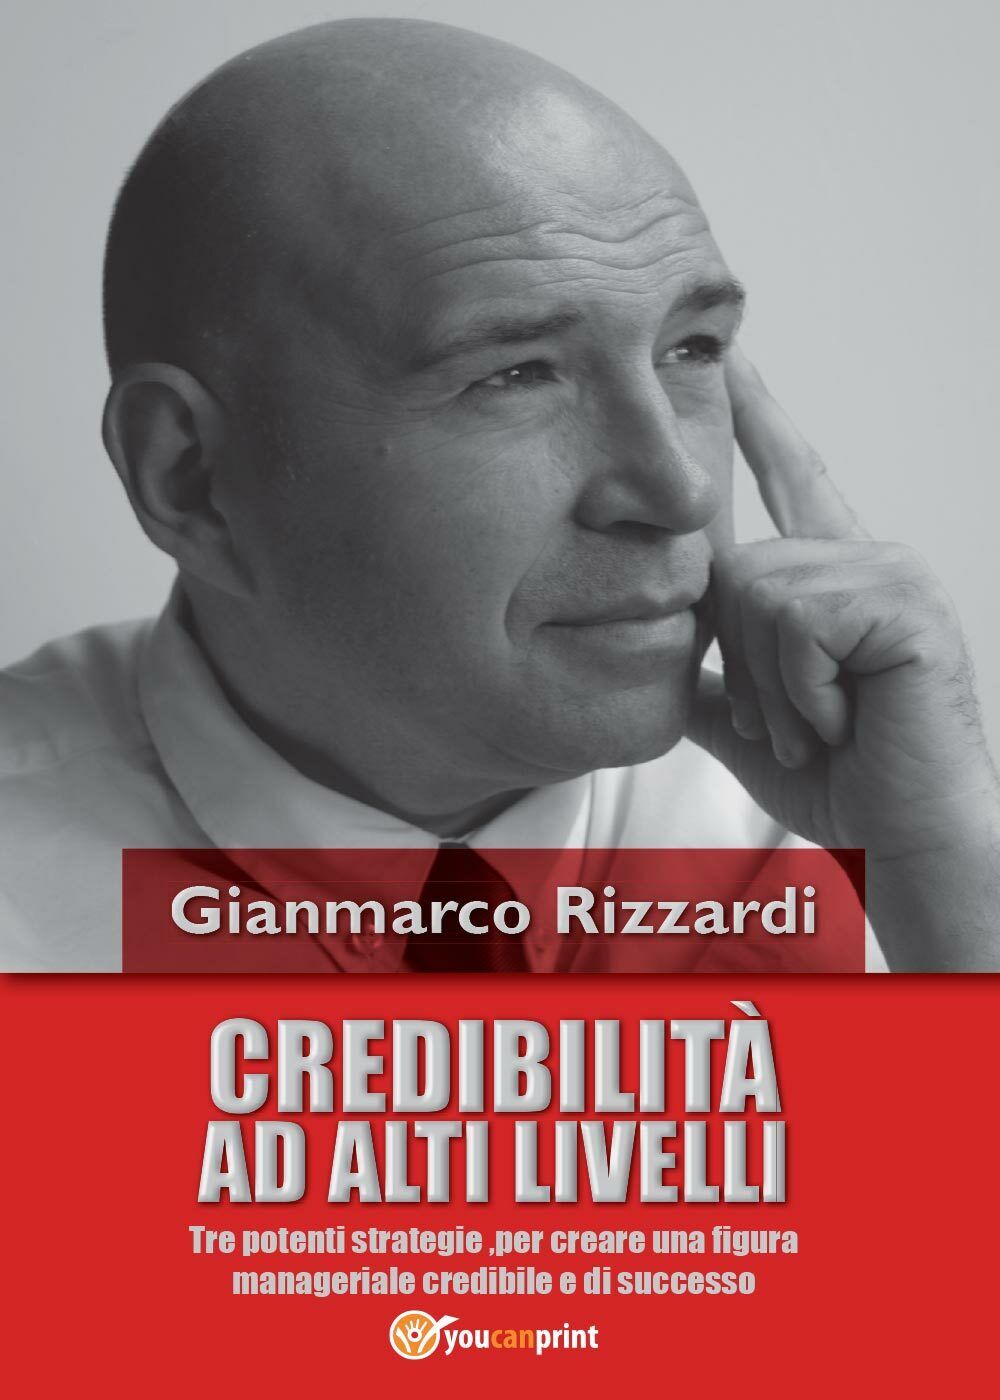 Credibilit? ad alti livelli - Gianmarco Rizzardi,  2016,  Youcanprint